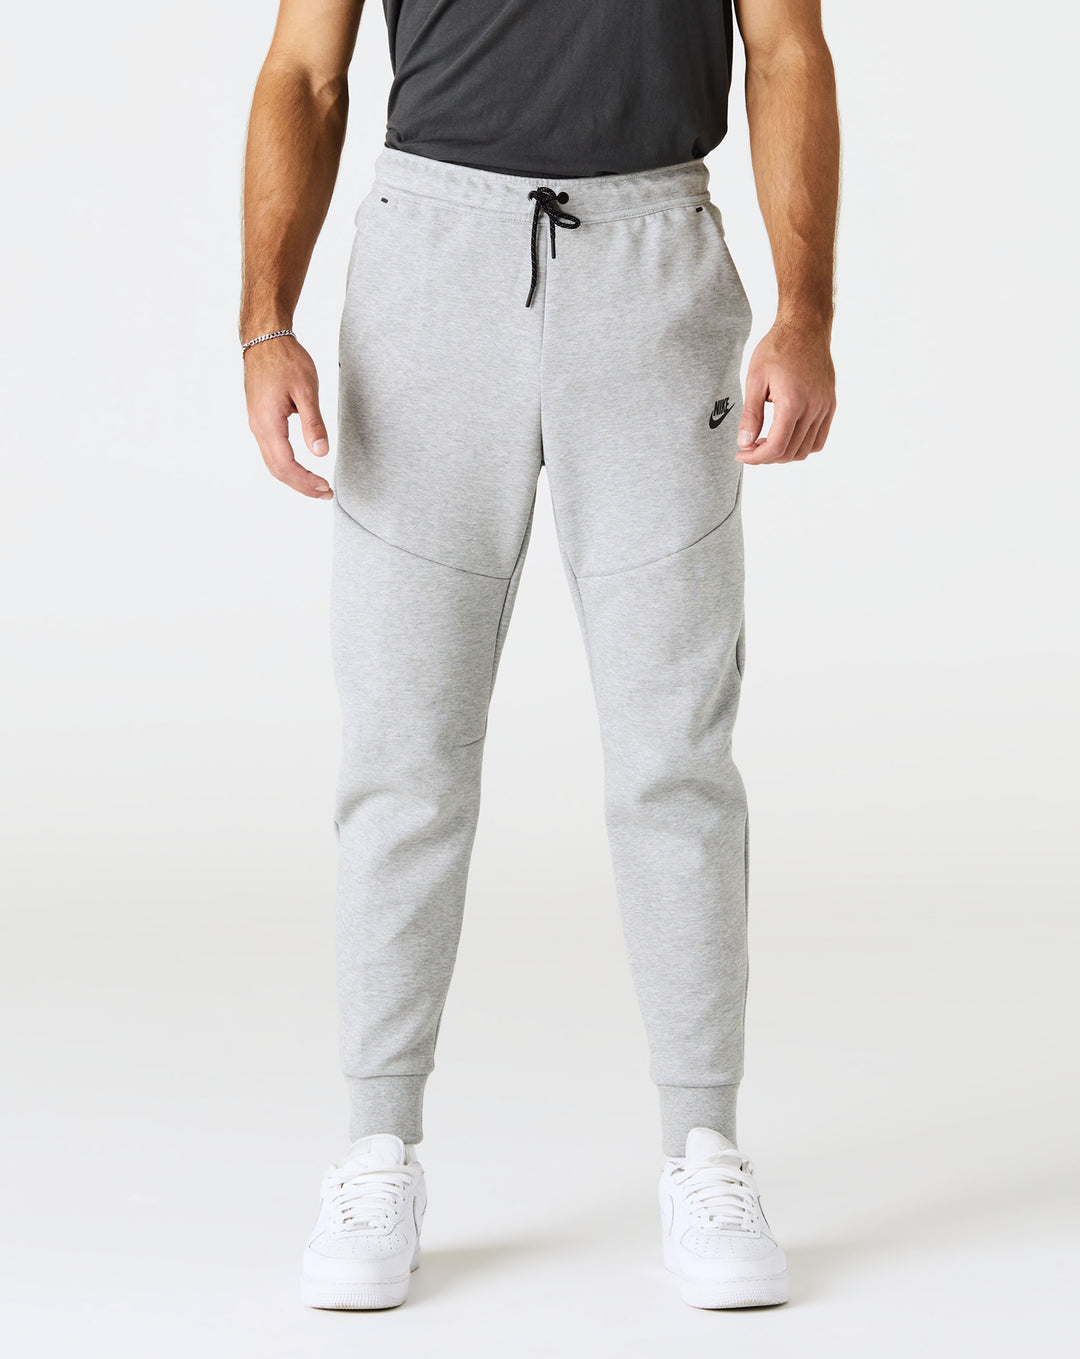 Nike - Tech Fleece Pants - Dark Grey Heather